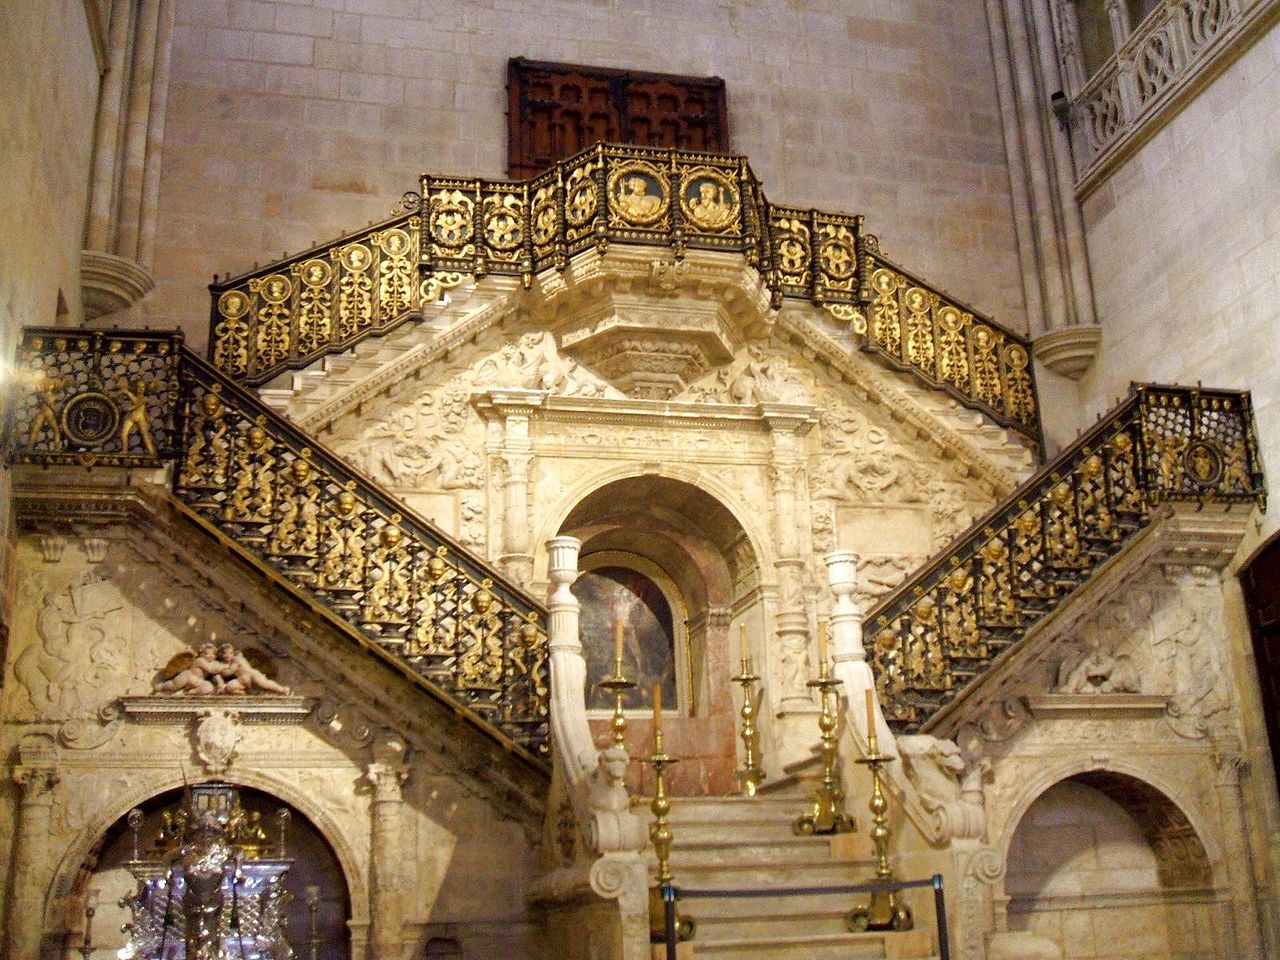 Escalera dorada de la catedral de Burgos, de Diego de Siloé